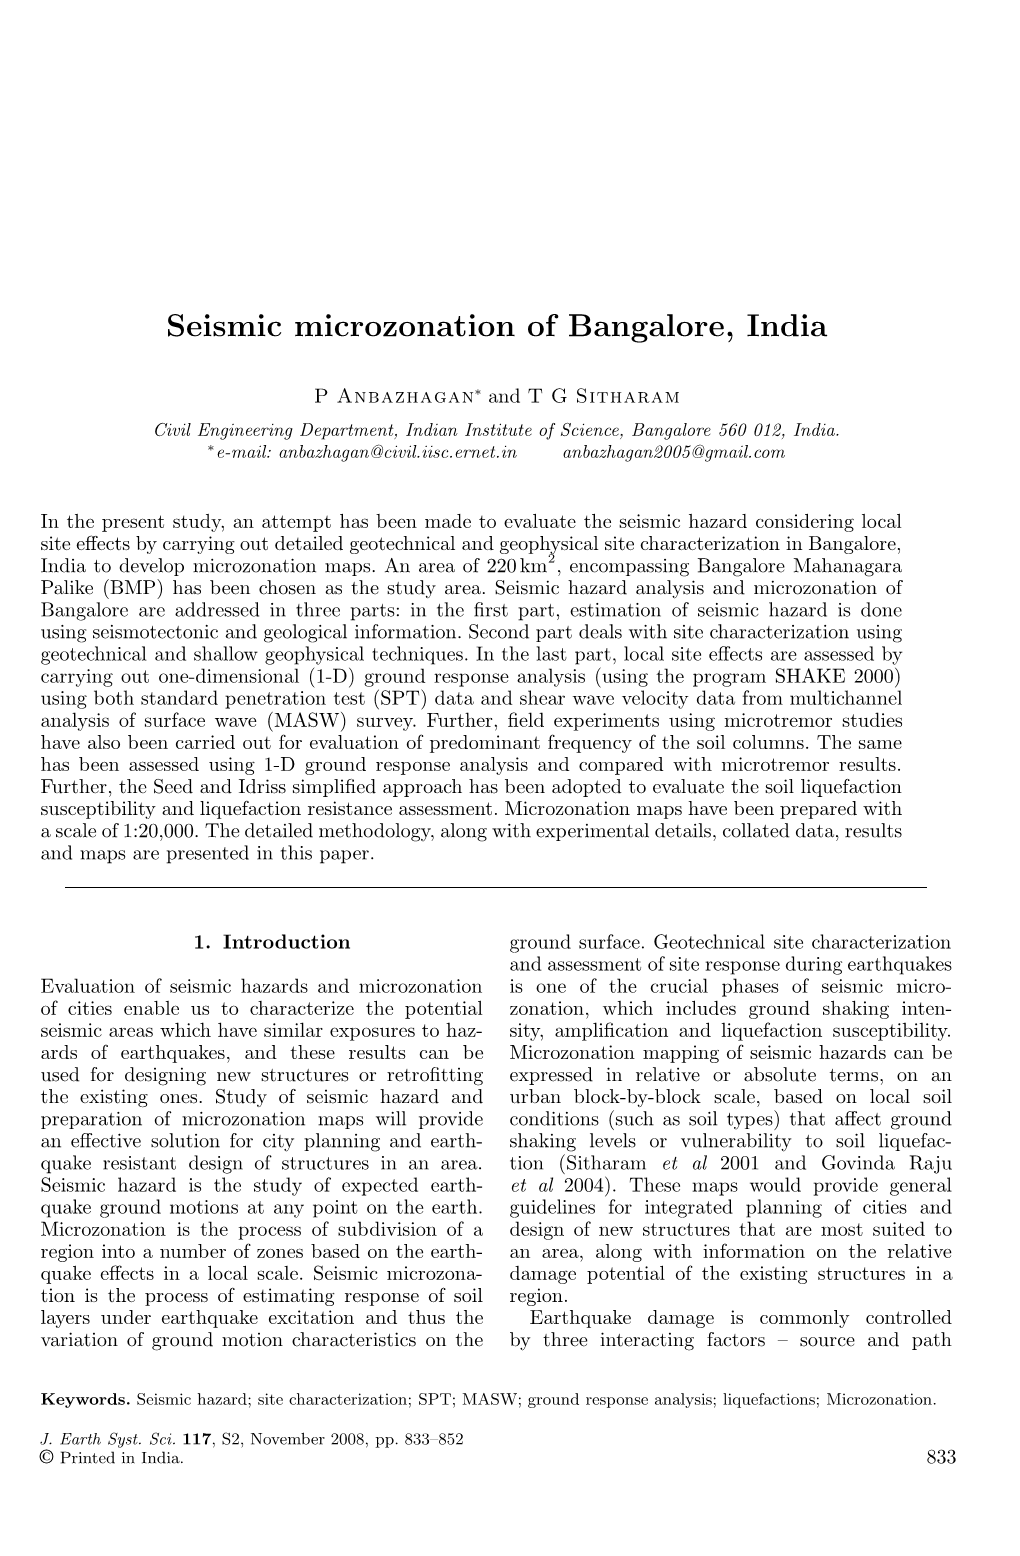 Seismic Microzonation of Bangalore, India